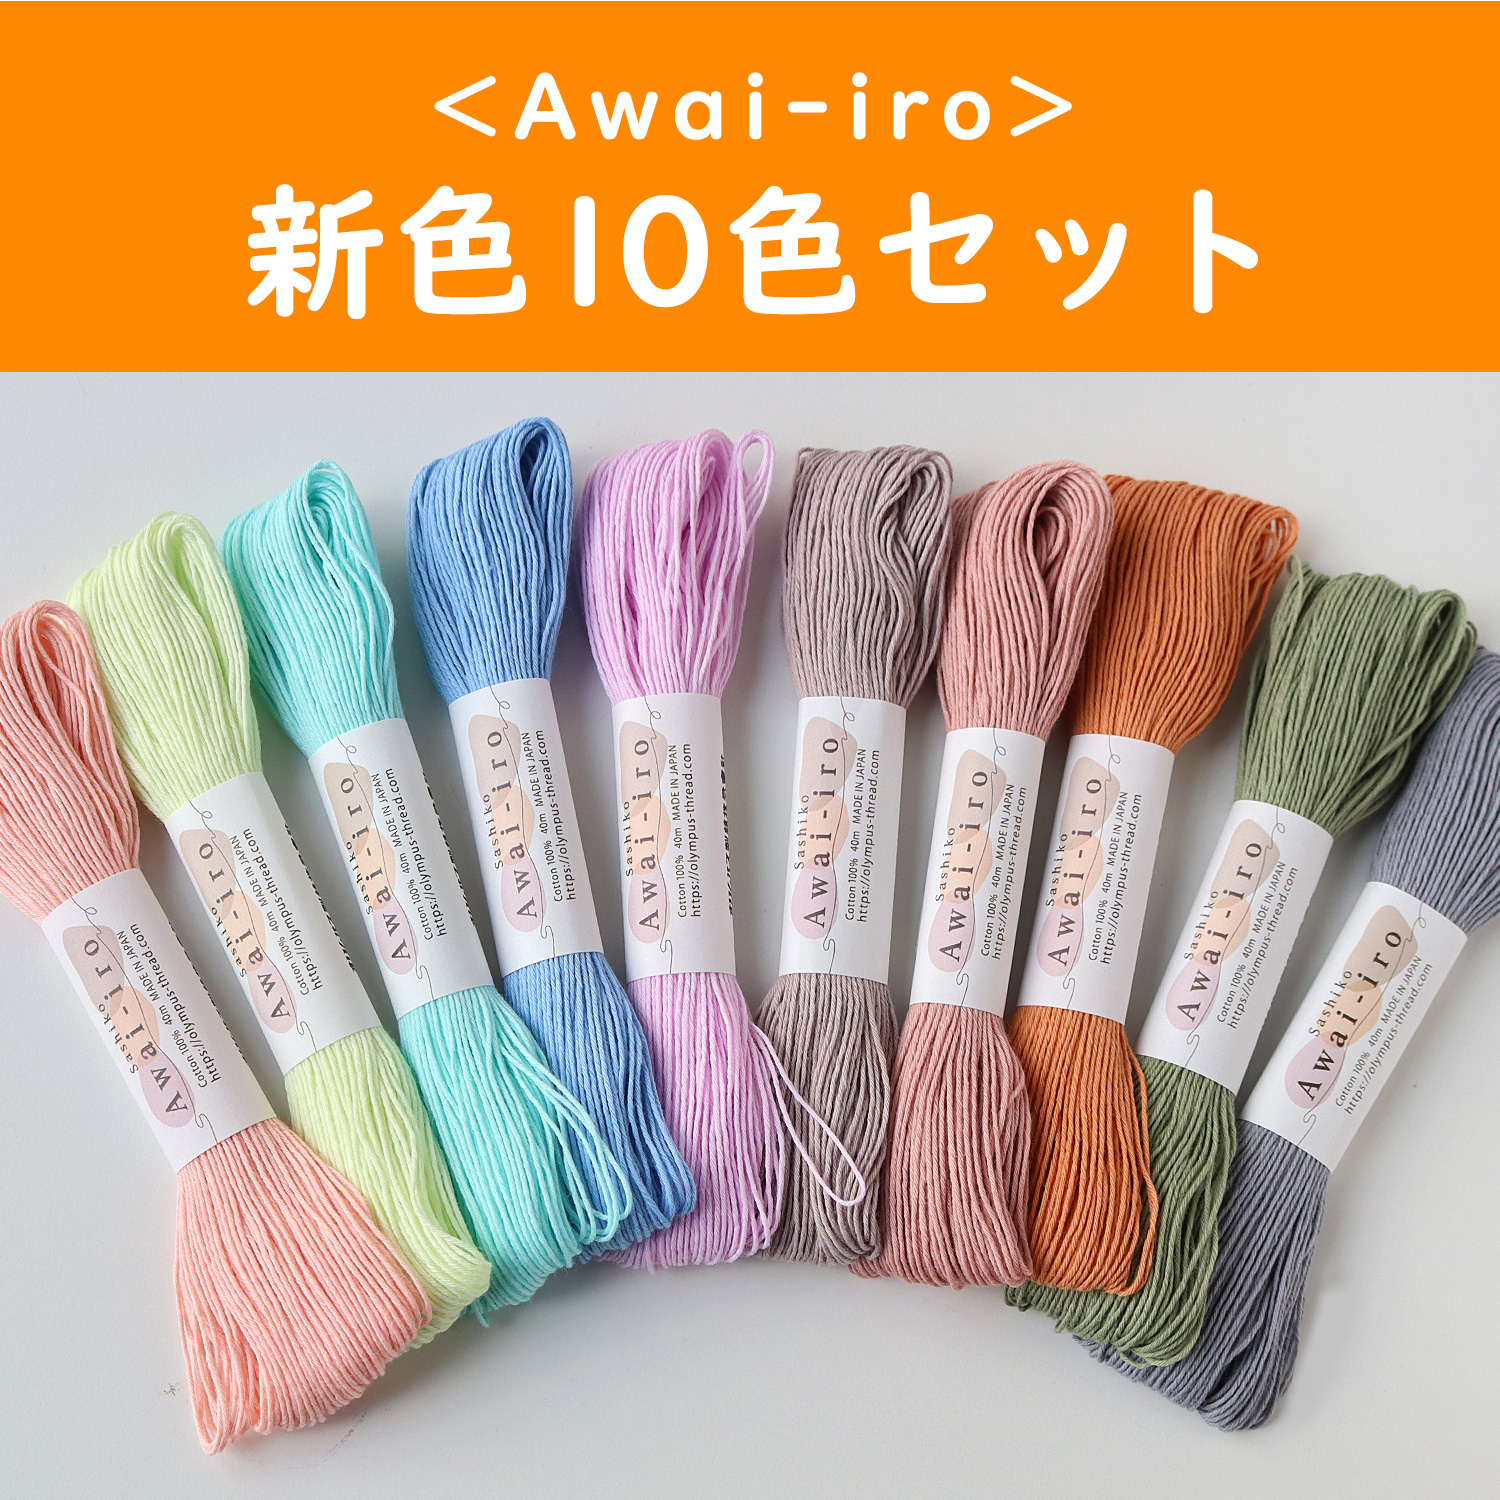 OLY-NA10SET Olympus SASHIKO Embroidery Thread Sashiko Awai-iro [NEW color]  1color/pack 40m total 10 colors set(pack)